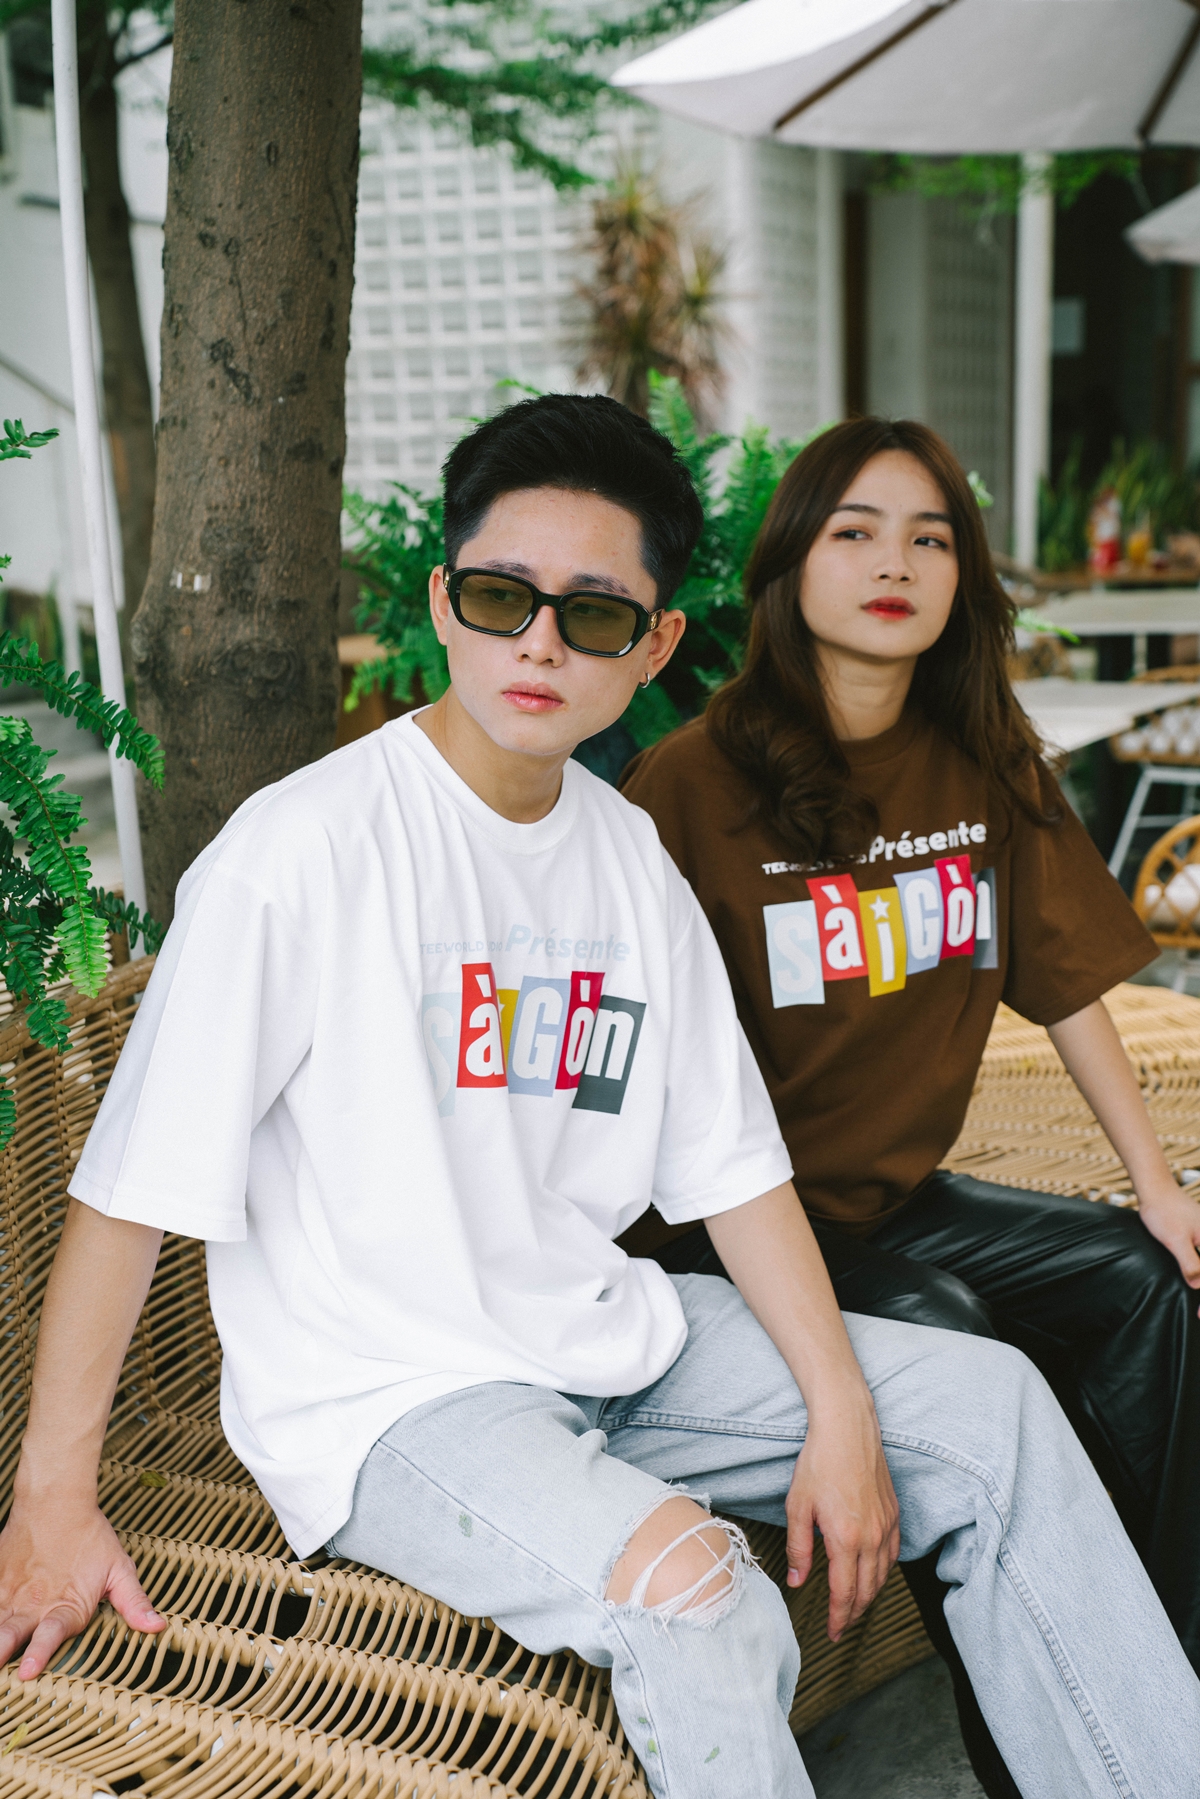 Áo Teeworld Saigon Présente T-shirt Unisex Nam Nữ Fỏm Rộng